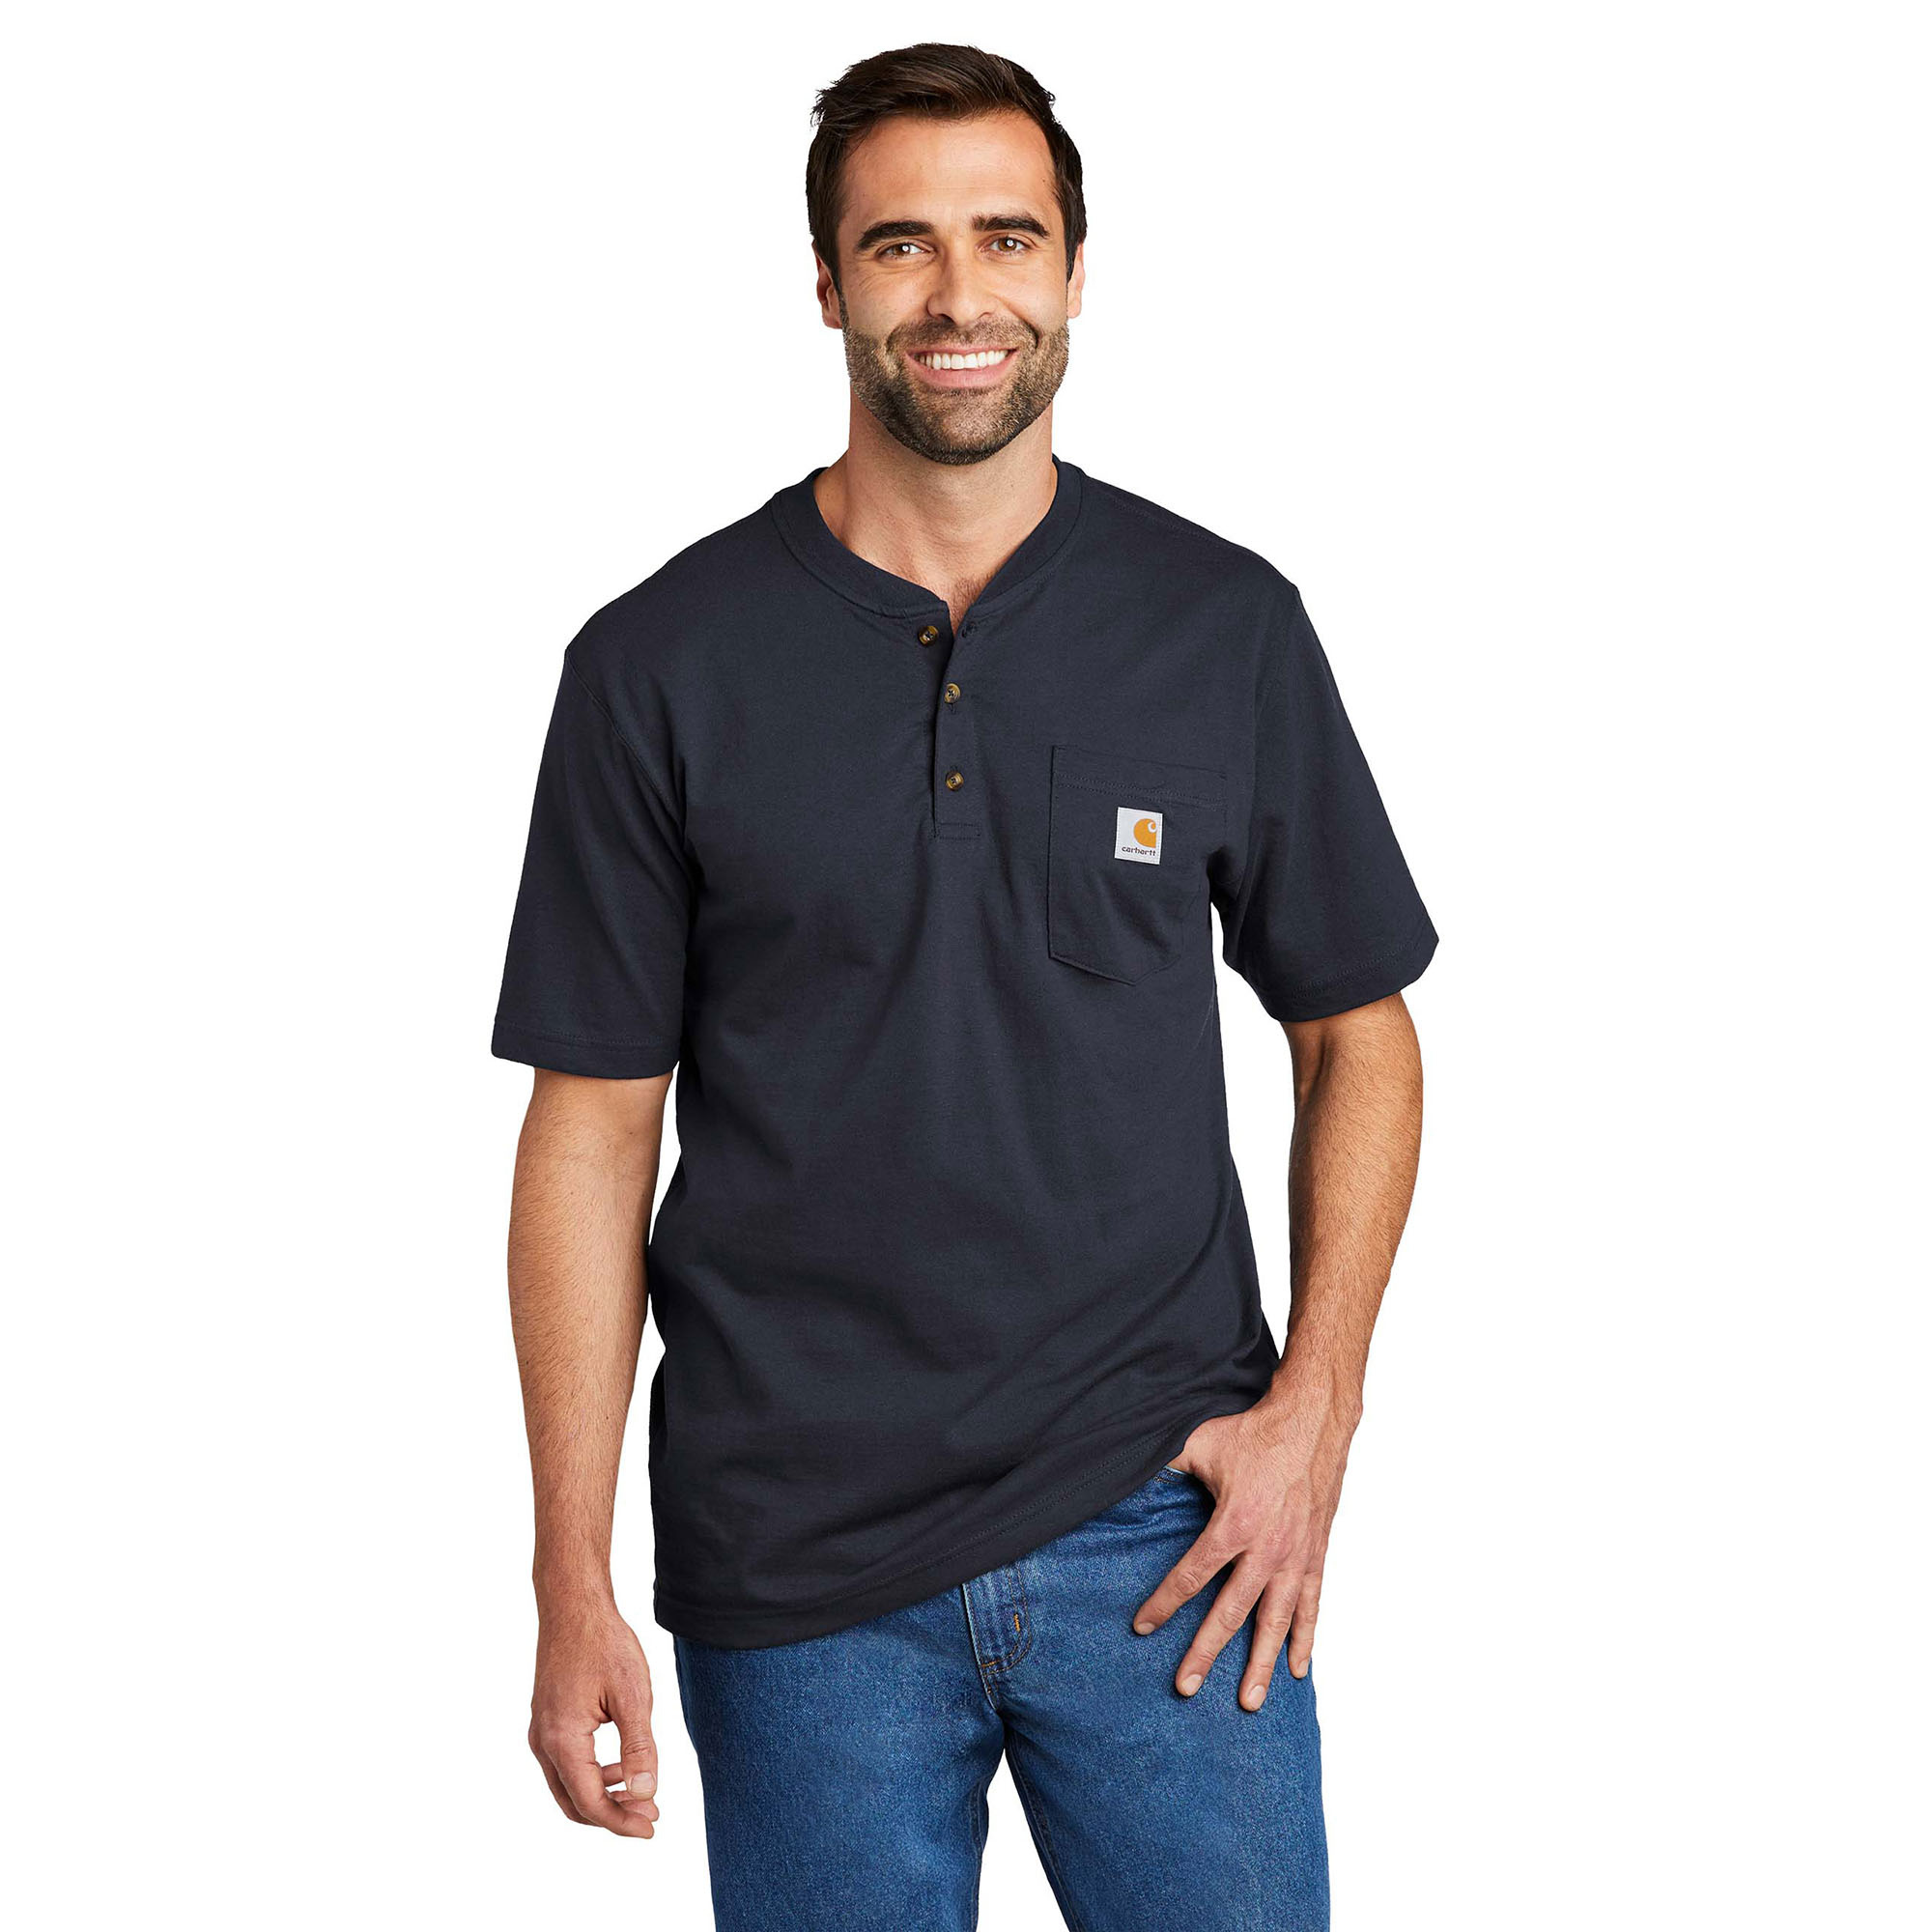 Carhartt K84 Workwear Short Sleeve Henley T-Shirt - Navy | Full Source